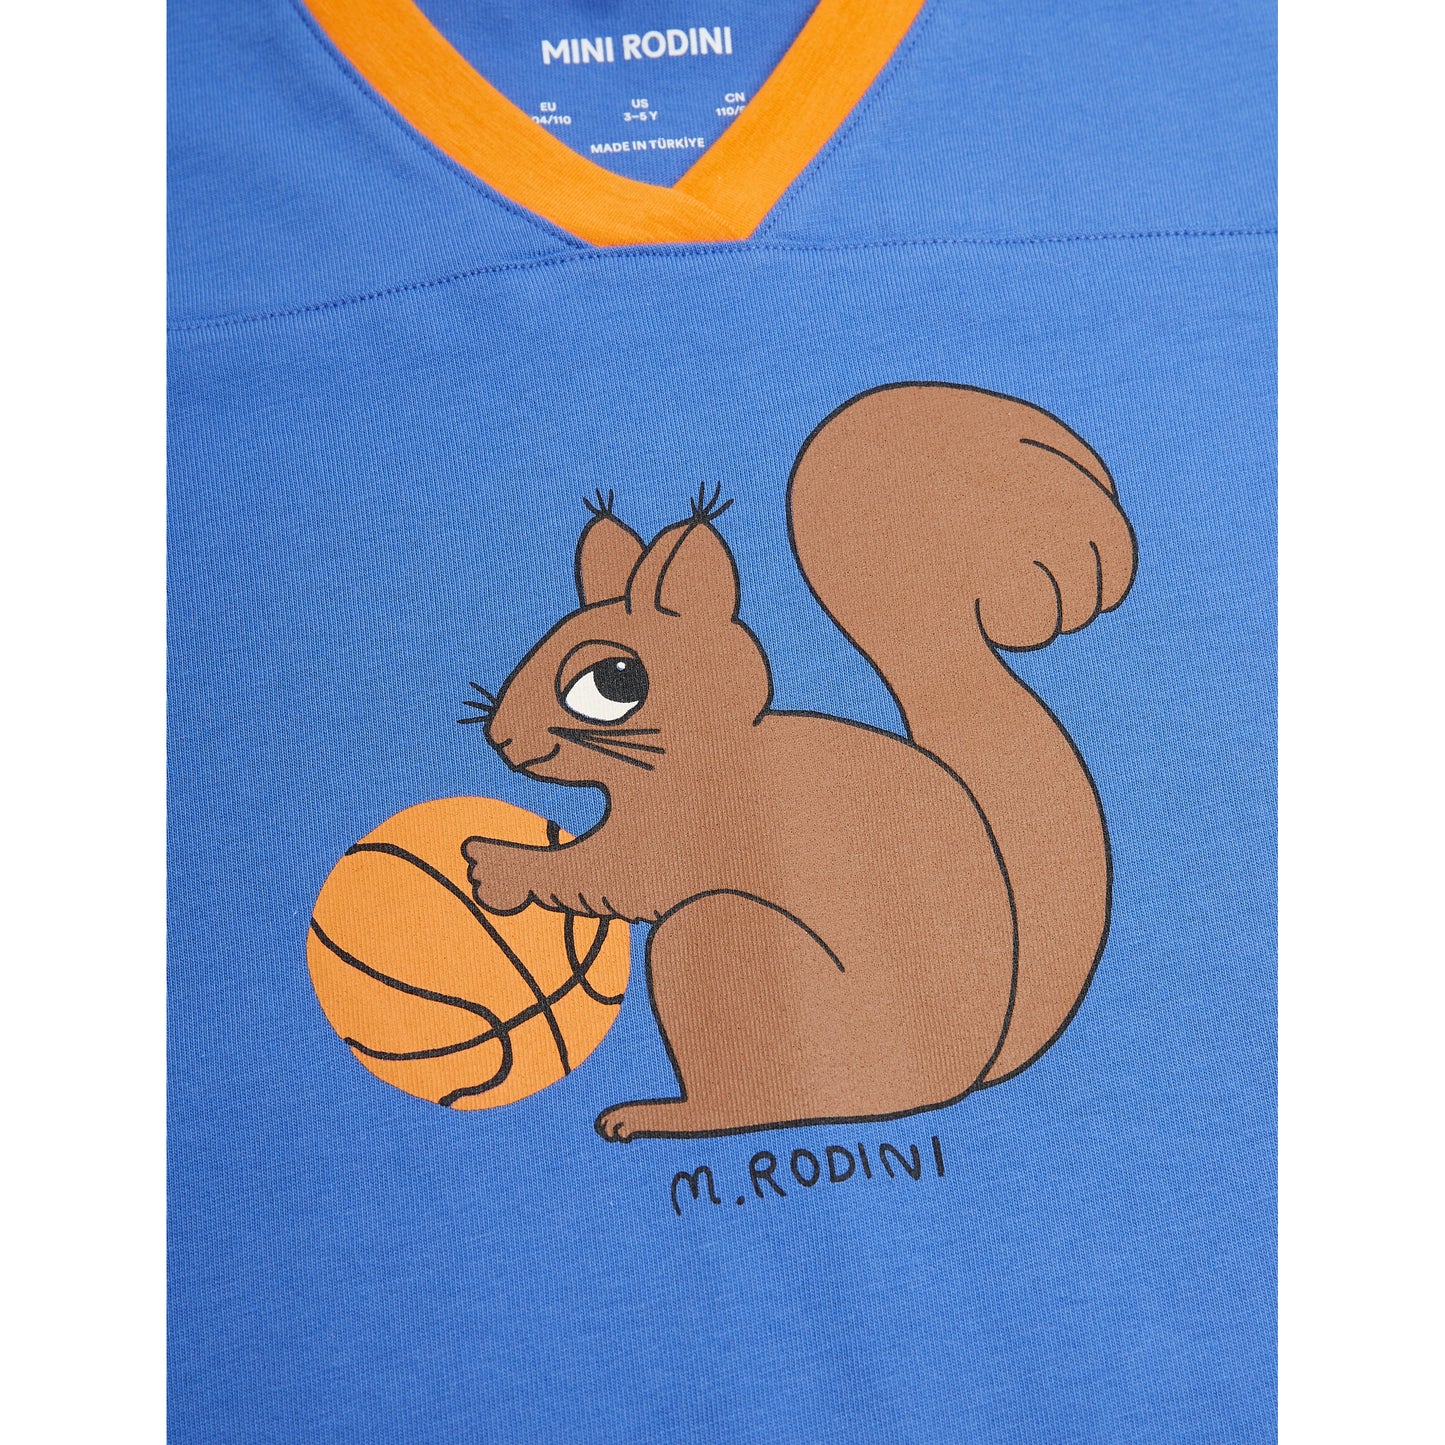 MINI RODINI Squirrels Oversize T-Shirt ALWAYS SHOW